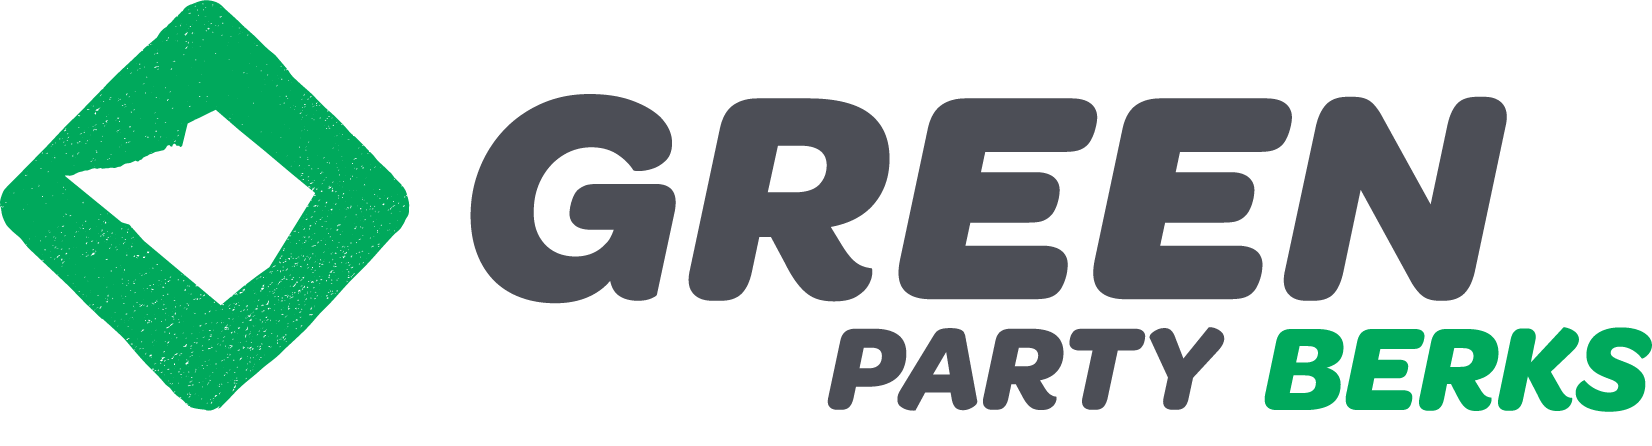 Berks County Green Party logo